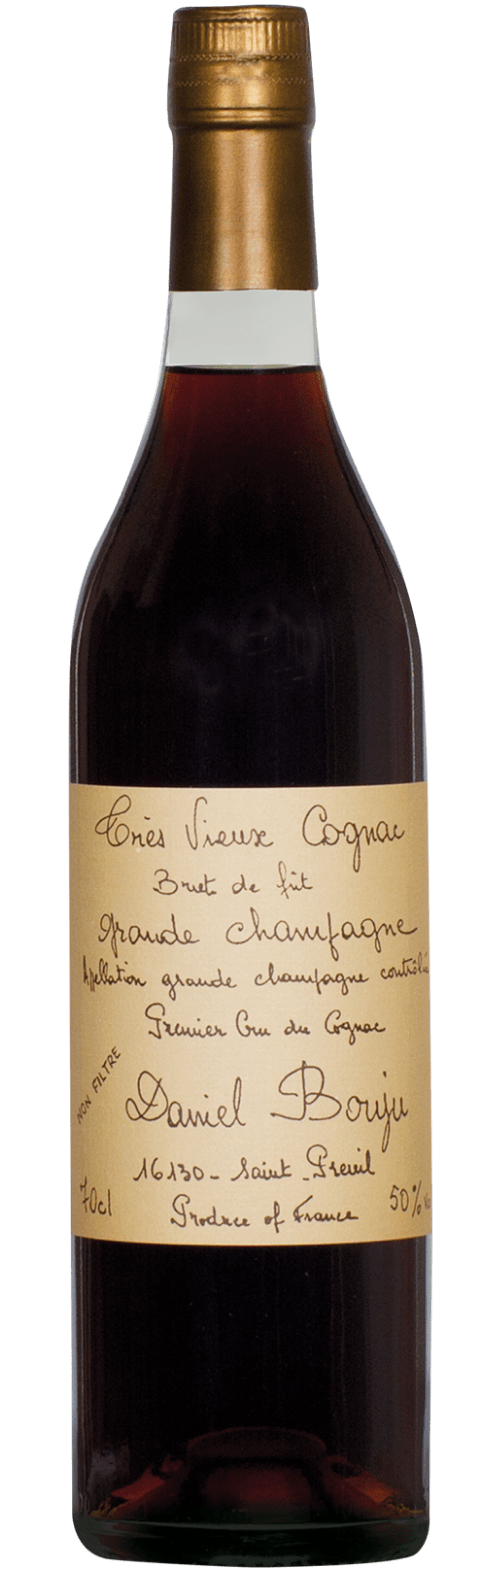 Brut de Fut Cognac Grande Champagne A.C.C. 